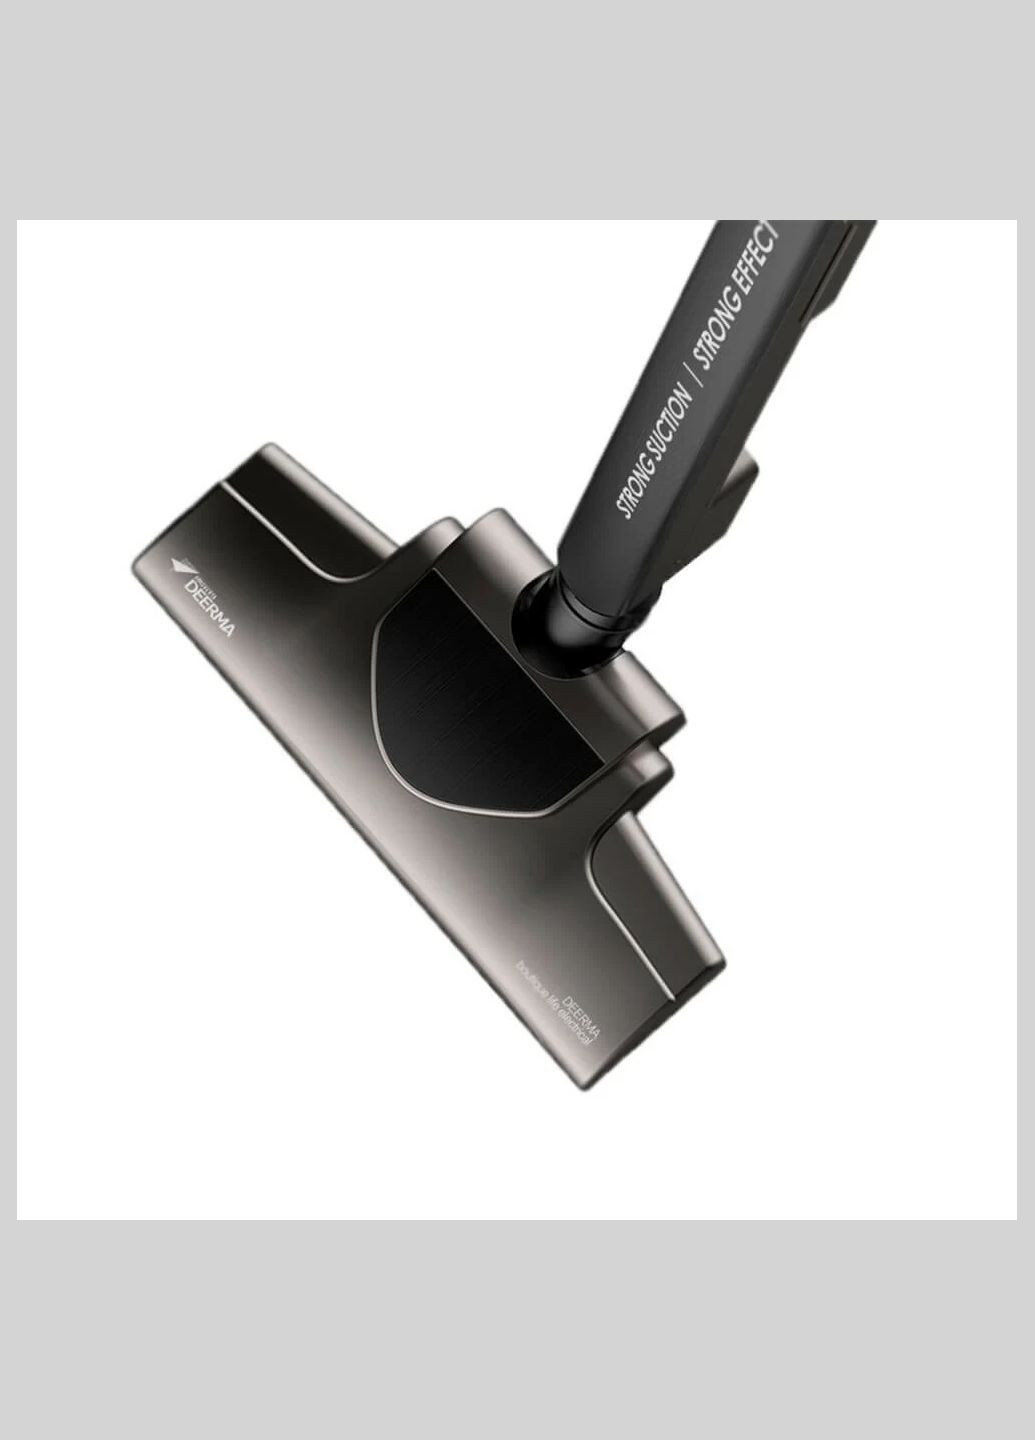 Пилосос Stick Vacuum Cleaner Cord сірий DX700S Global DEERMA (277634691)